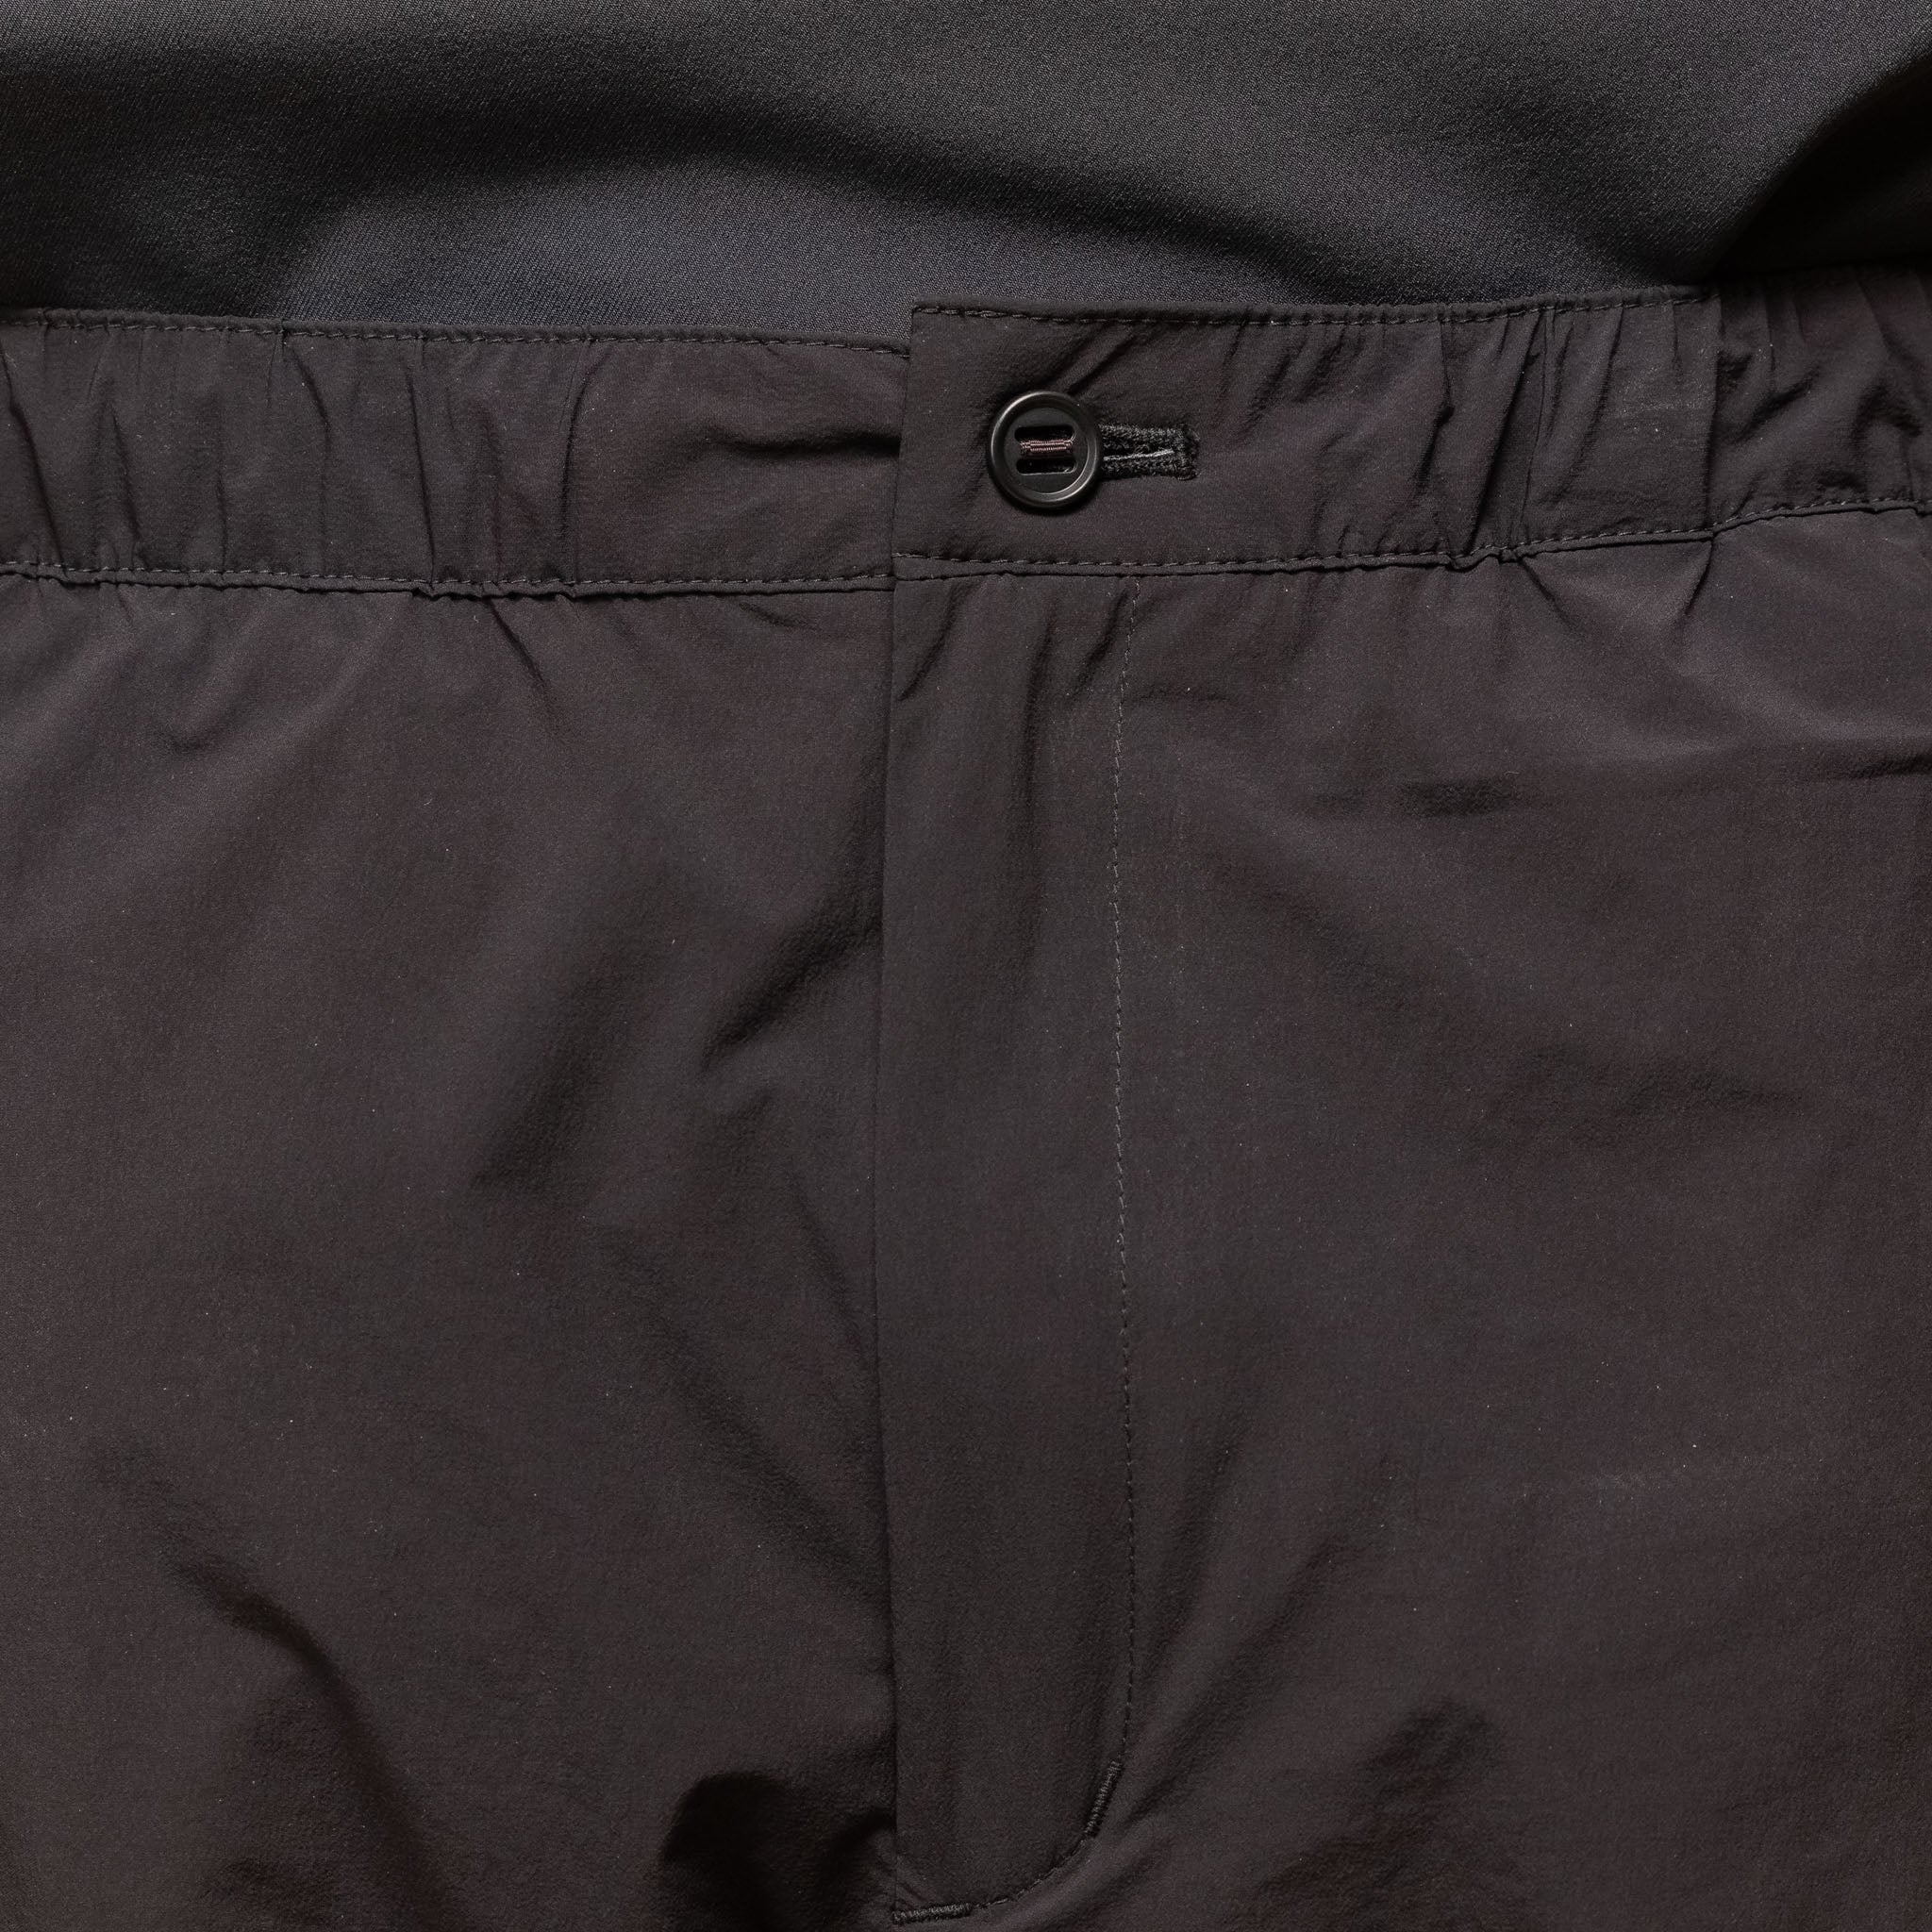 DOMXGD85U Descente 81 - Pocketable Light Half Pants - Black